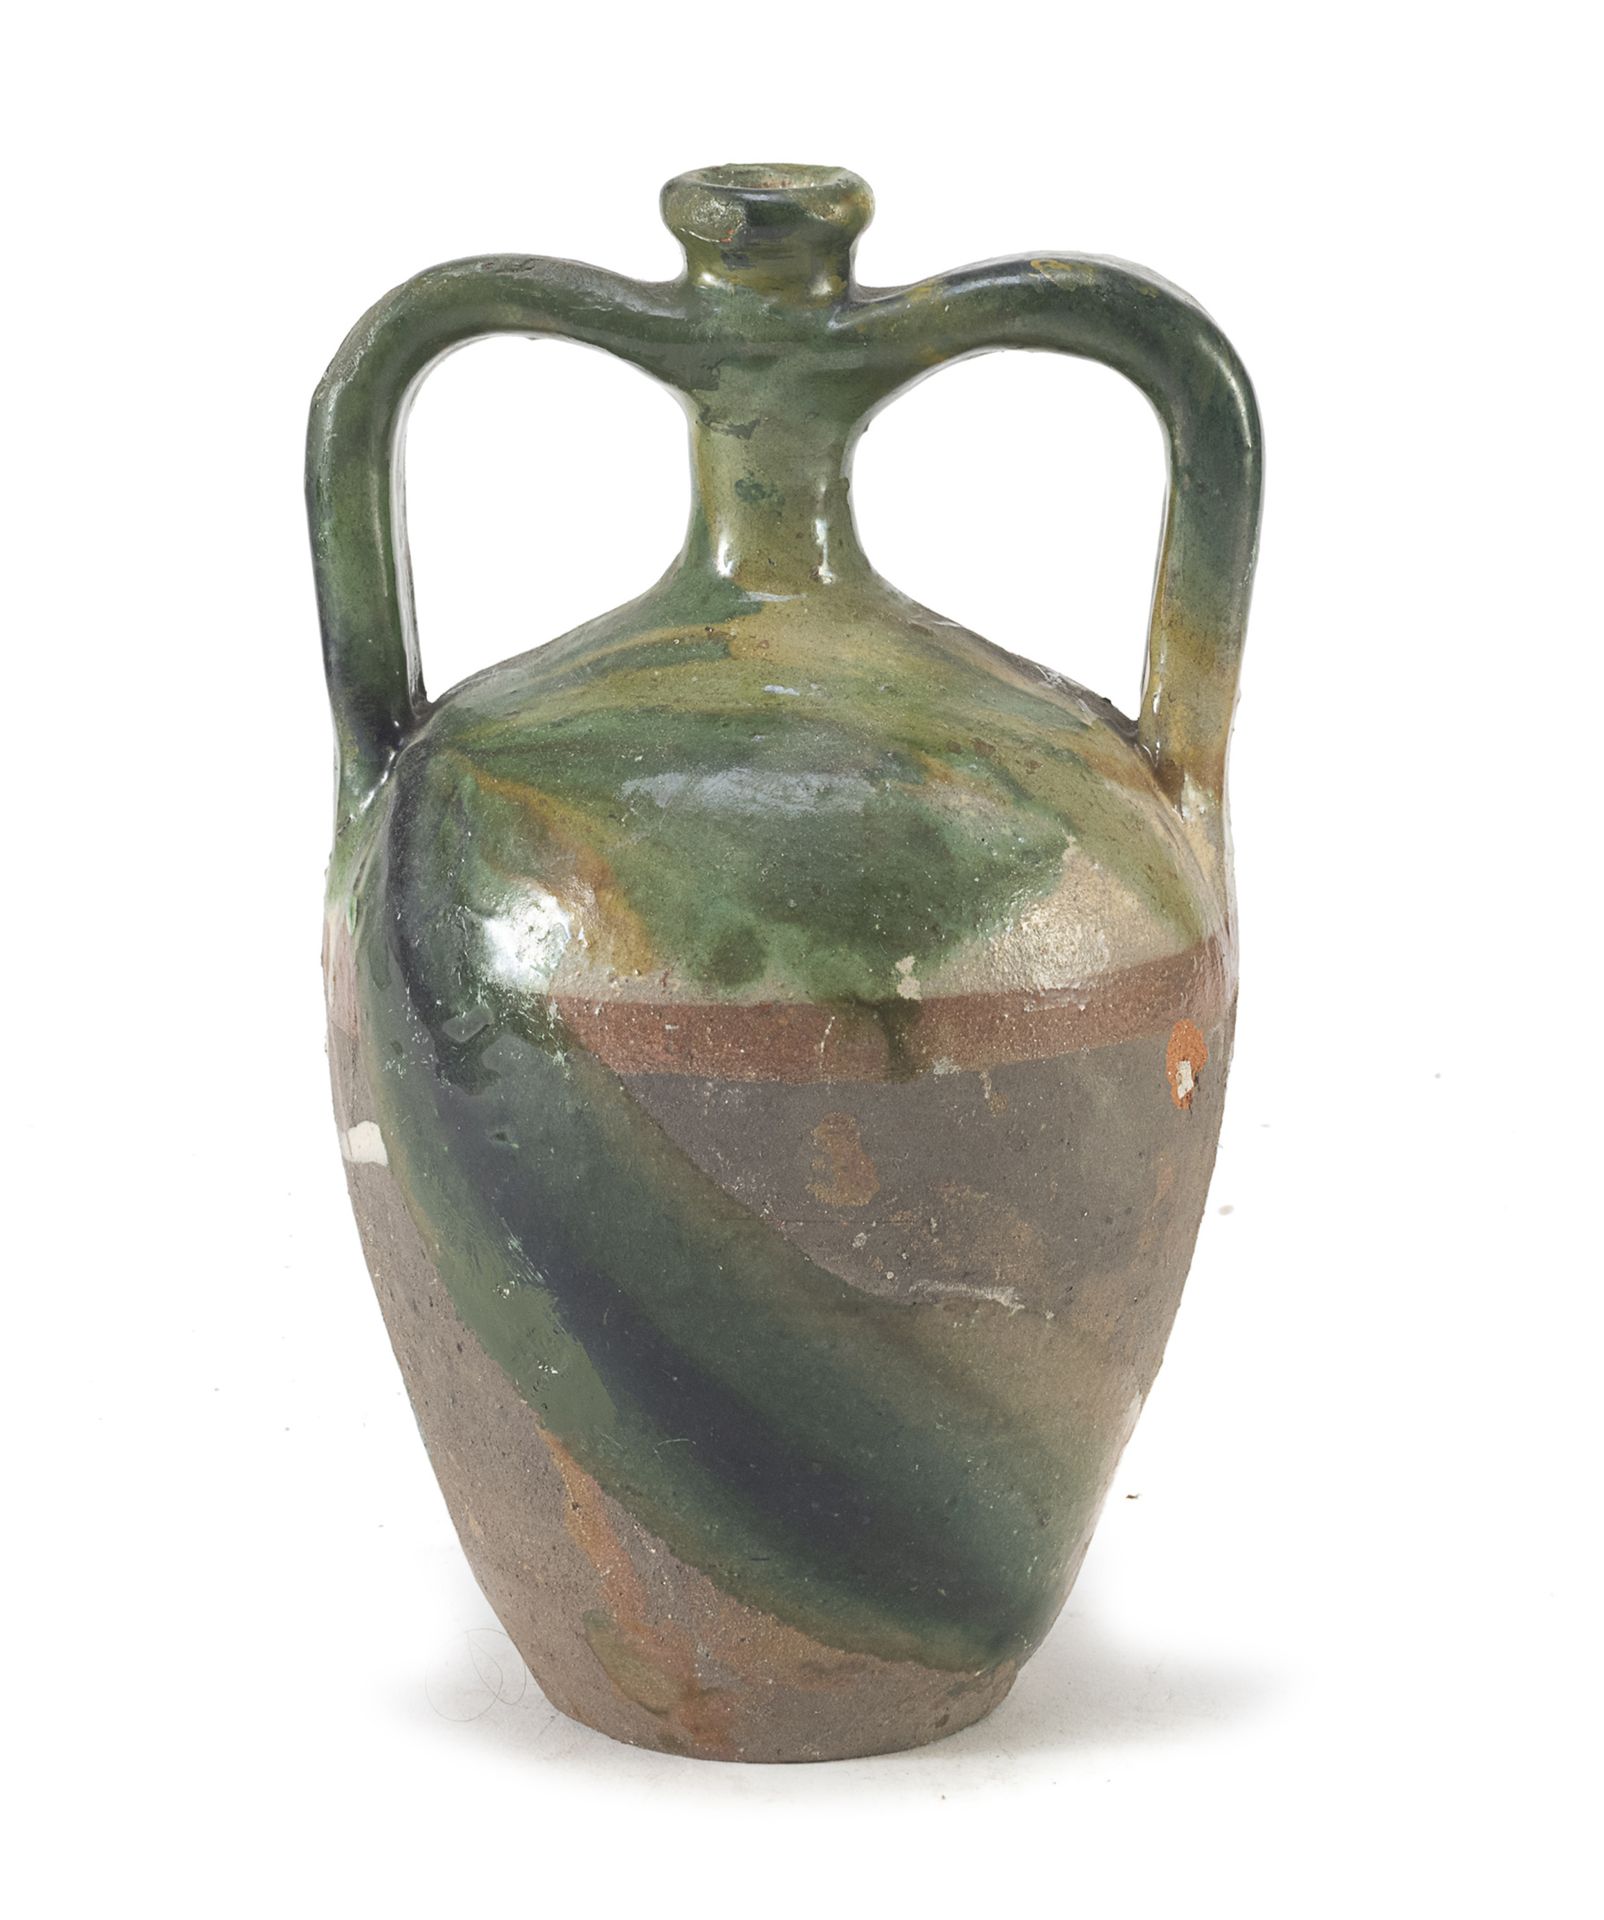 Null 小陶罐，Seminara，19世纪末

部分绿色和赭石色珐琅。丝带手柄。

尺寸为27 x 16 x 15厘米。